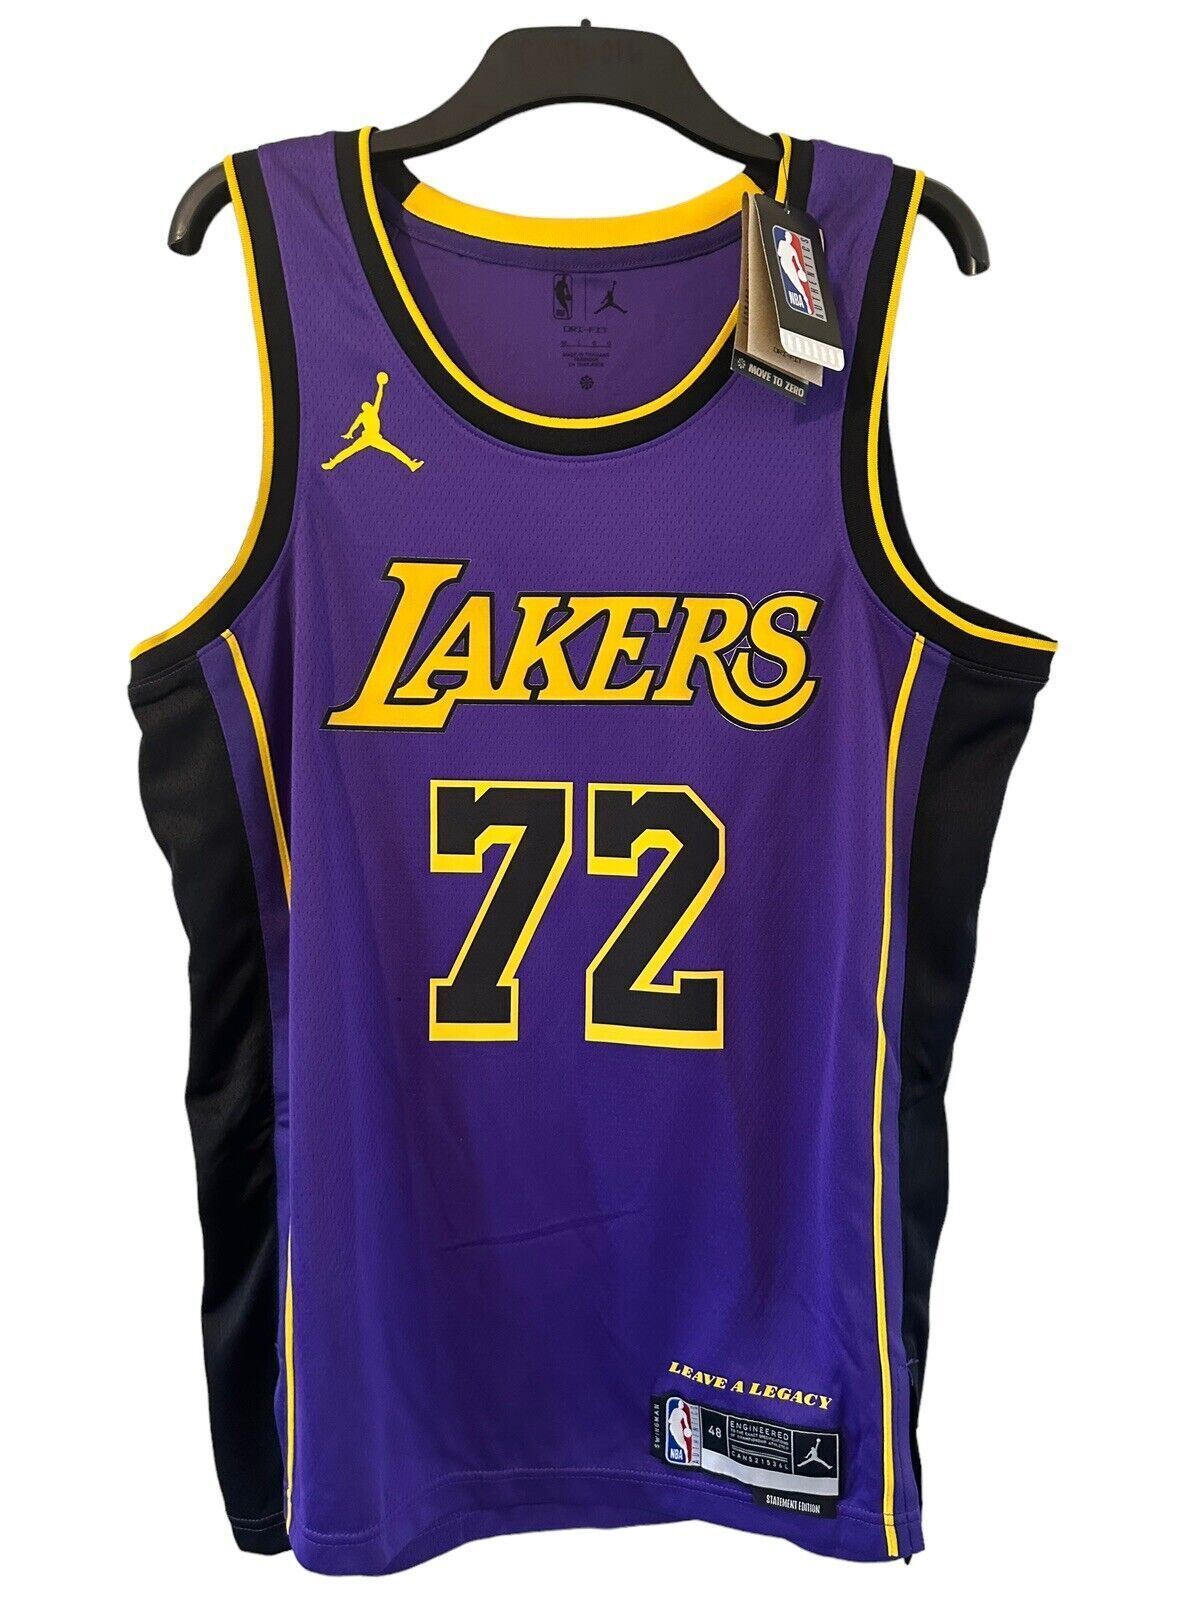 Nike Jordan NBA LA Lakers Statement Edition Jersey CLOSE 72 Men’s Large *DF*